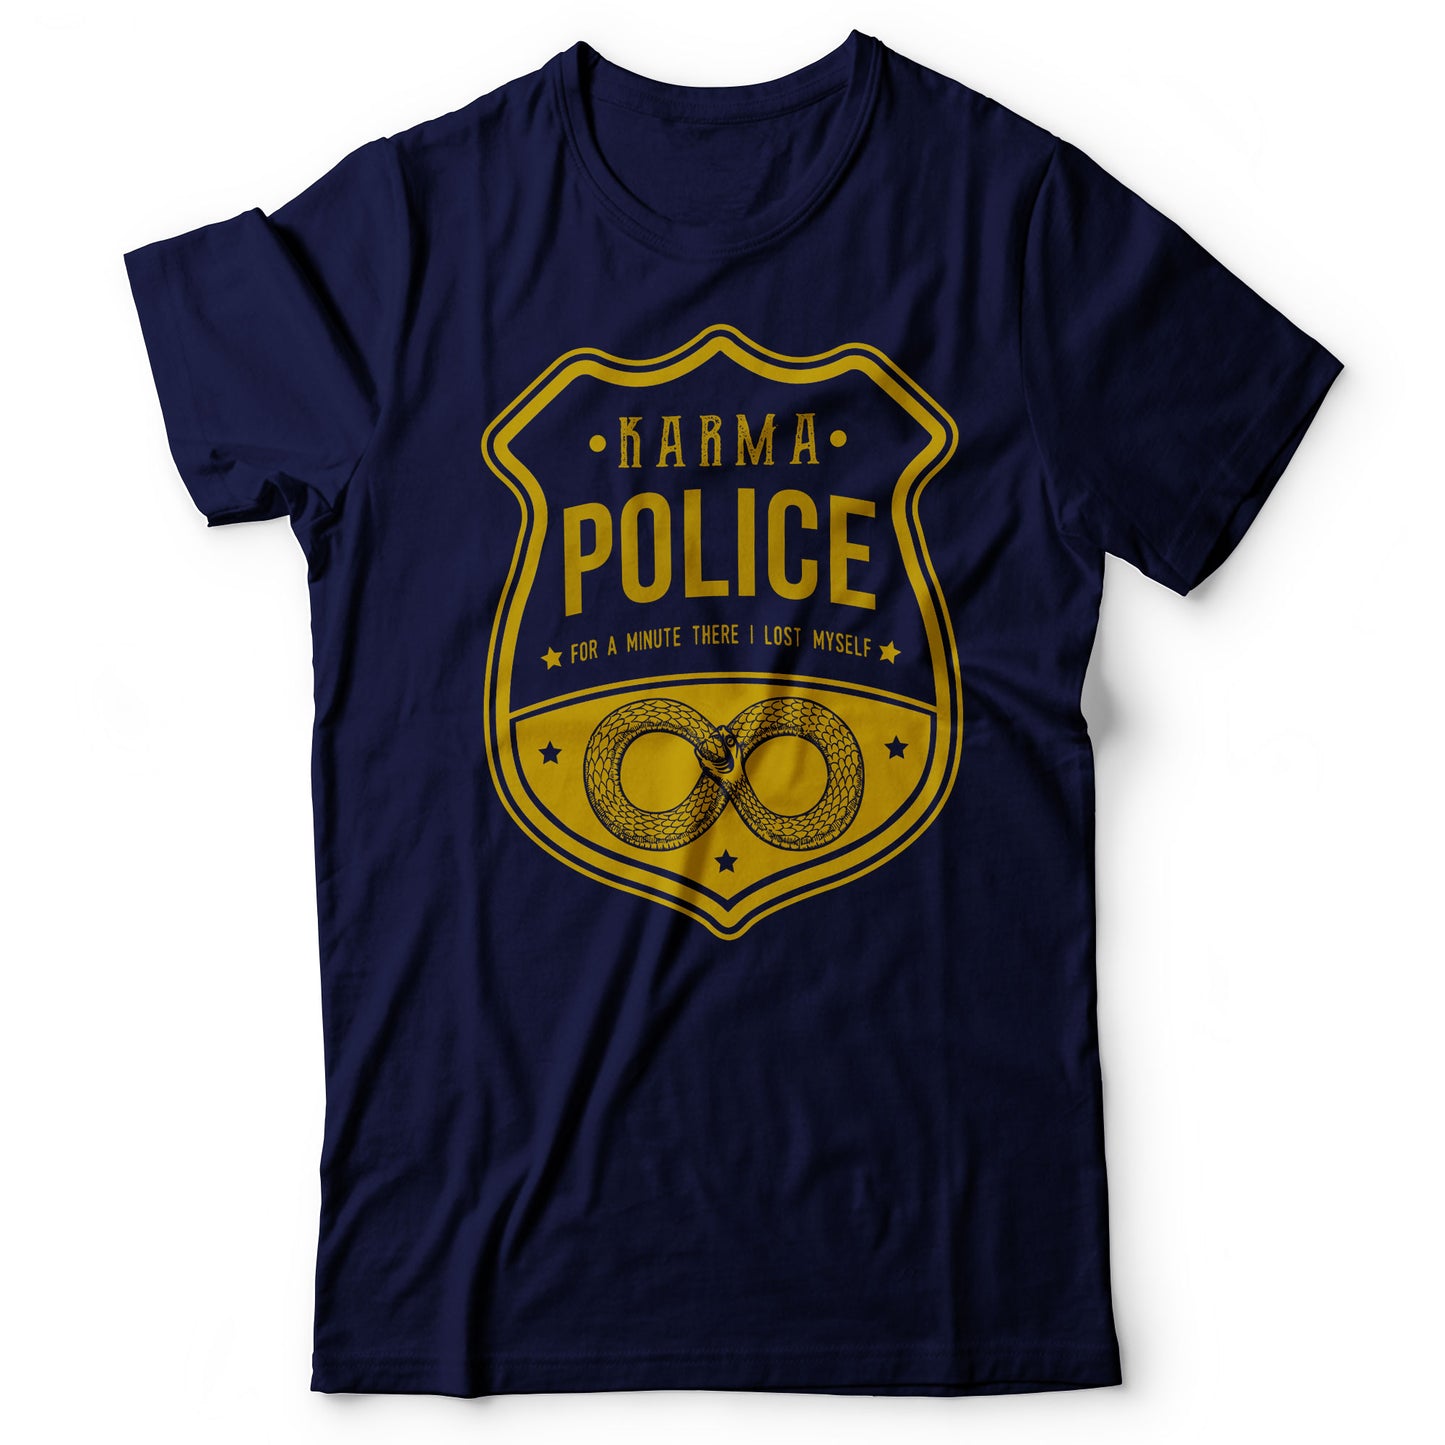 Radiohead - Karma Police - Men's T-shirt Navy Blue